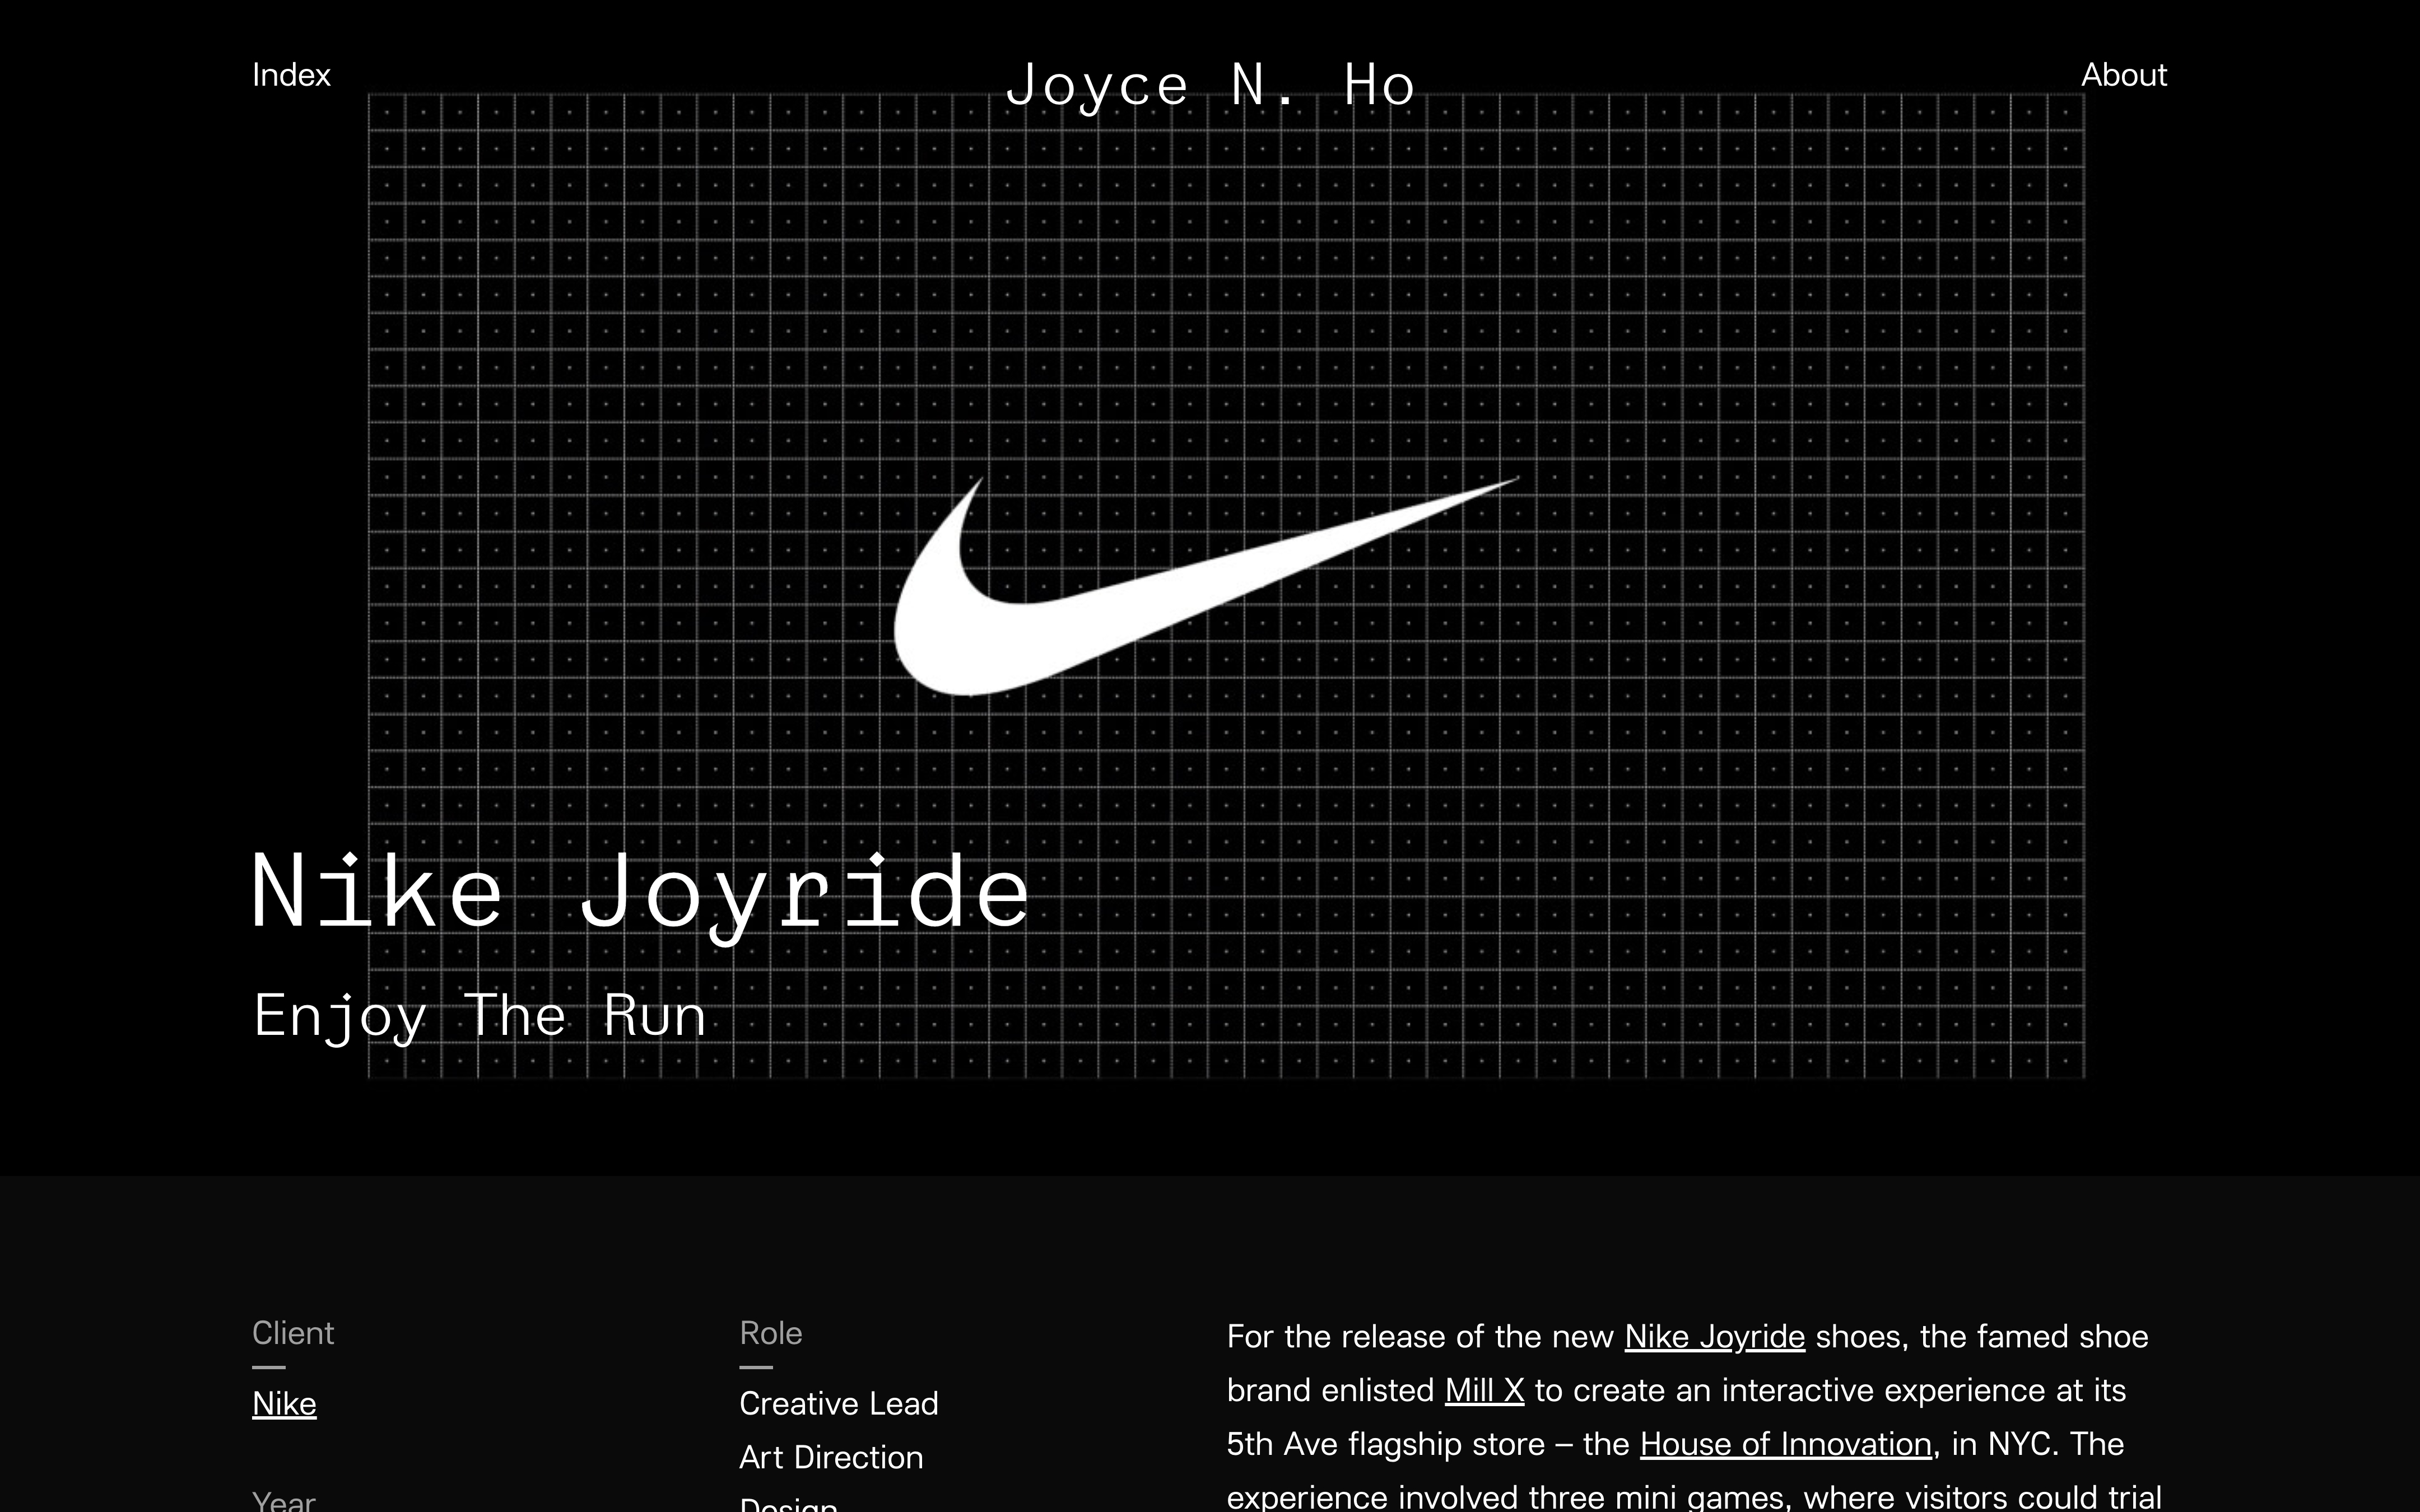 Joyce N. Ho project documentation image